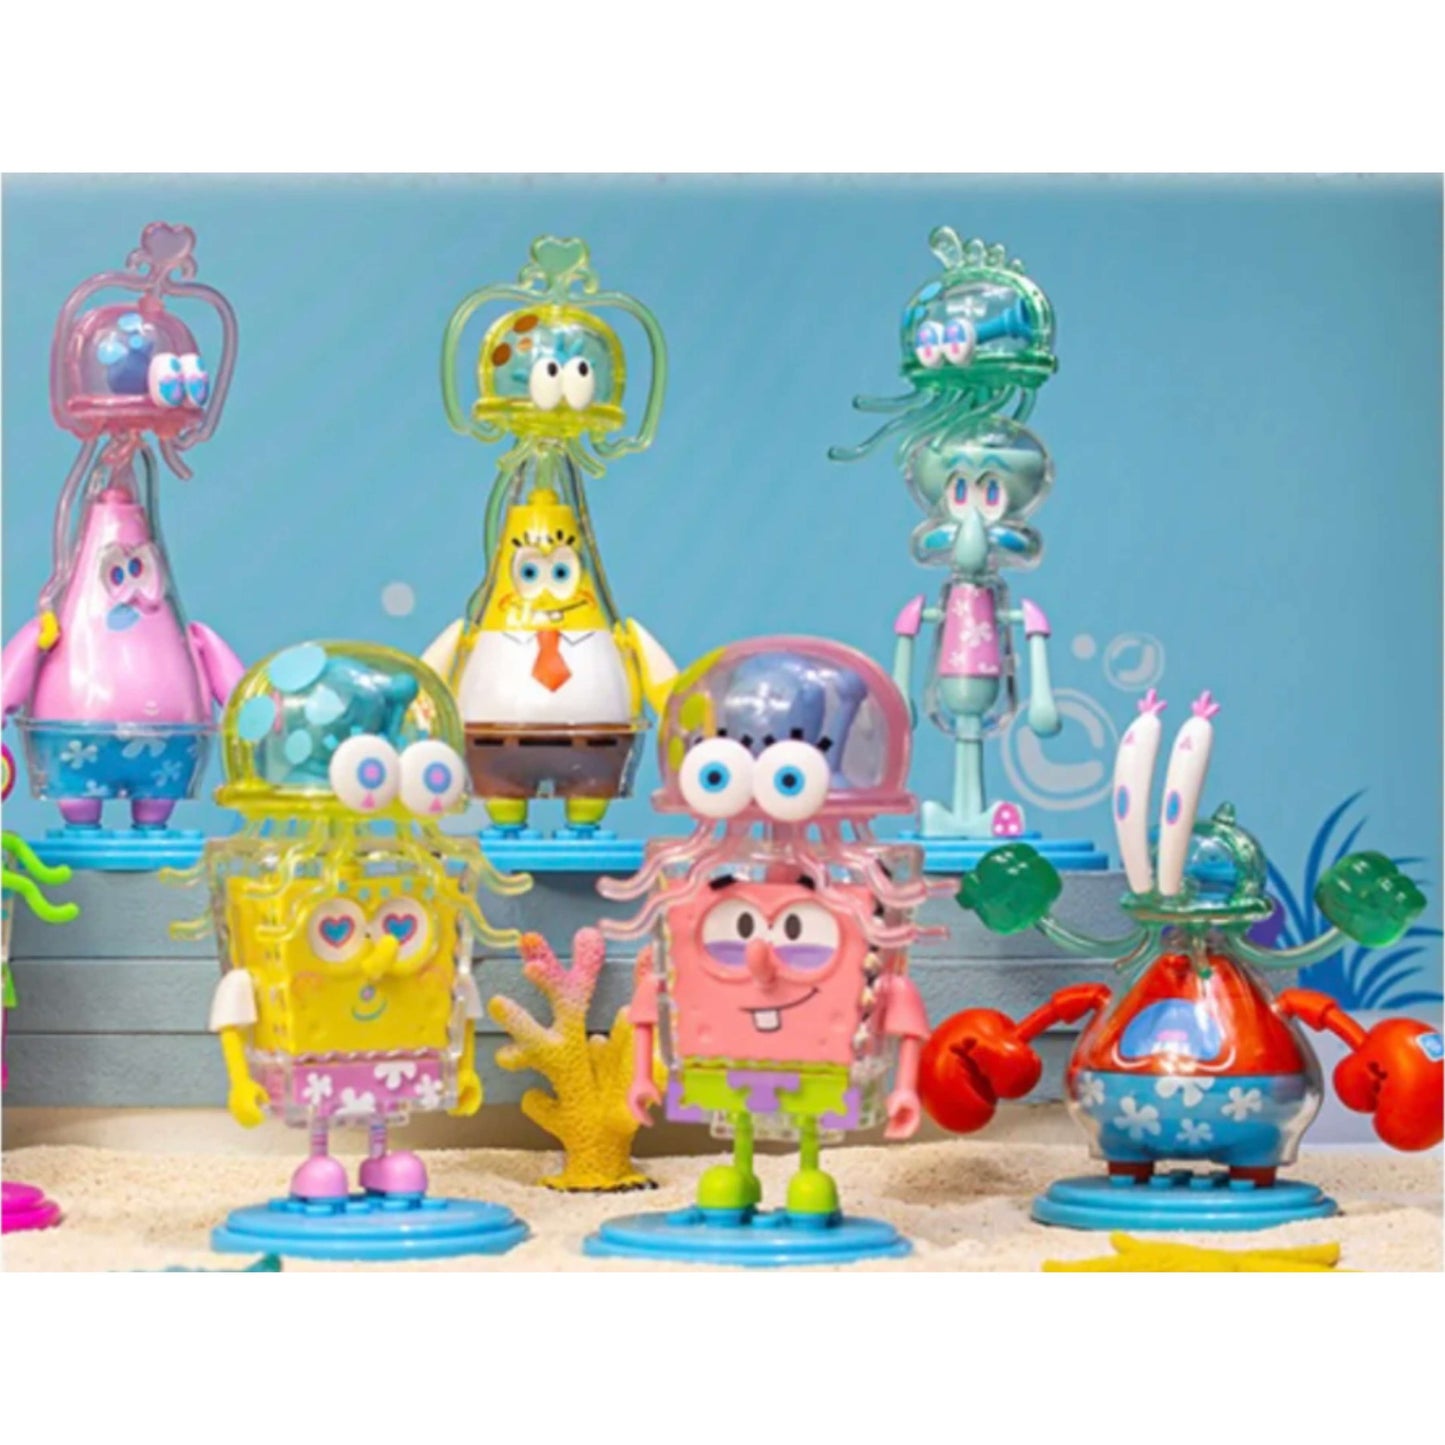 【New】SpongeBob Jellyfish Series Blind Box Random Style